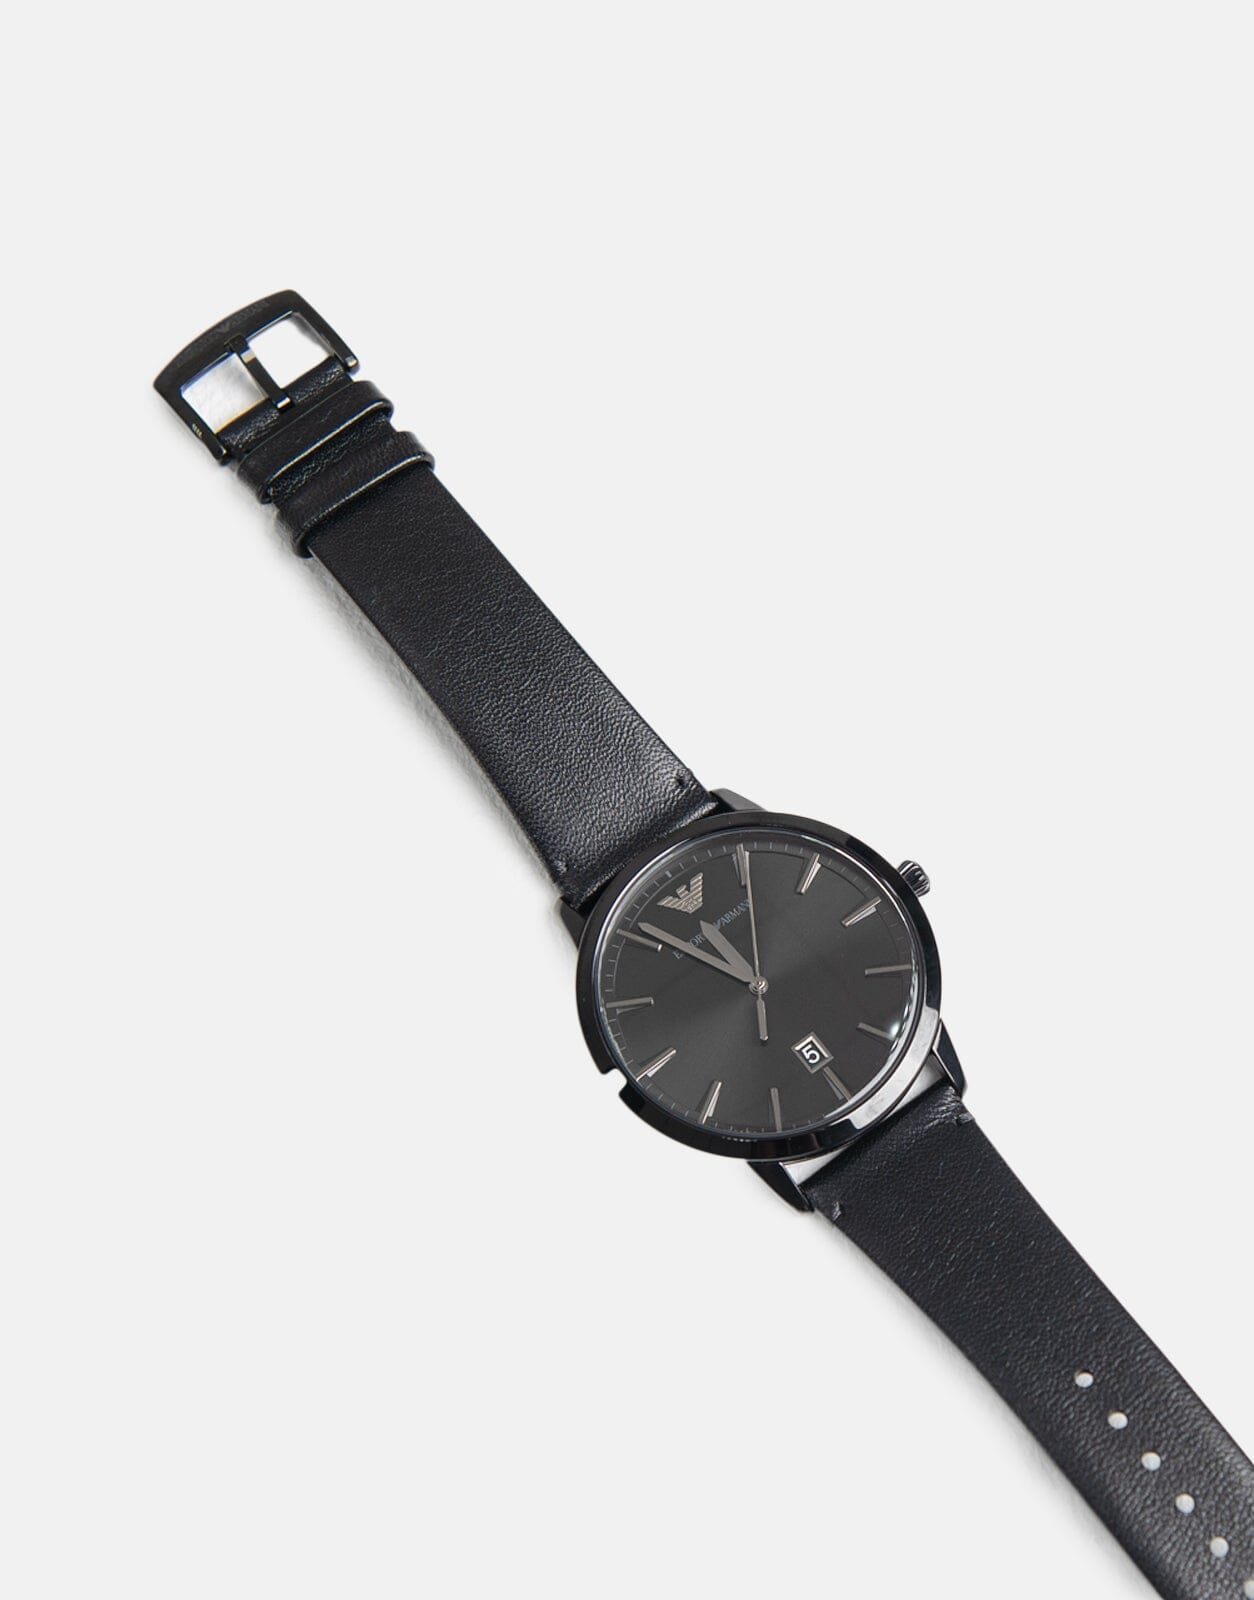 Armani Exchange Ruggero Black Leather Watch - Subwear